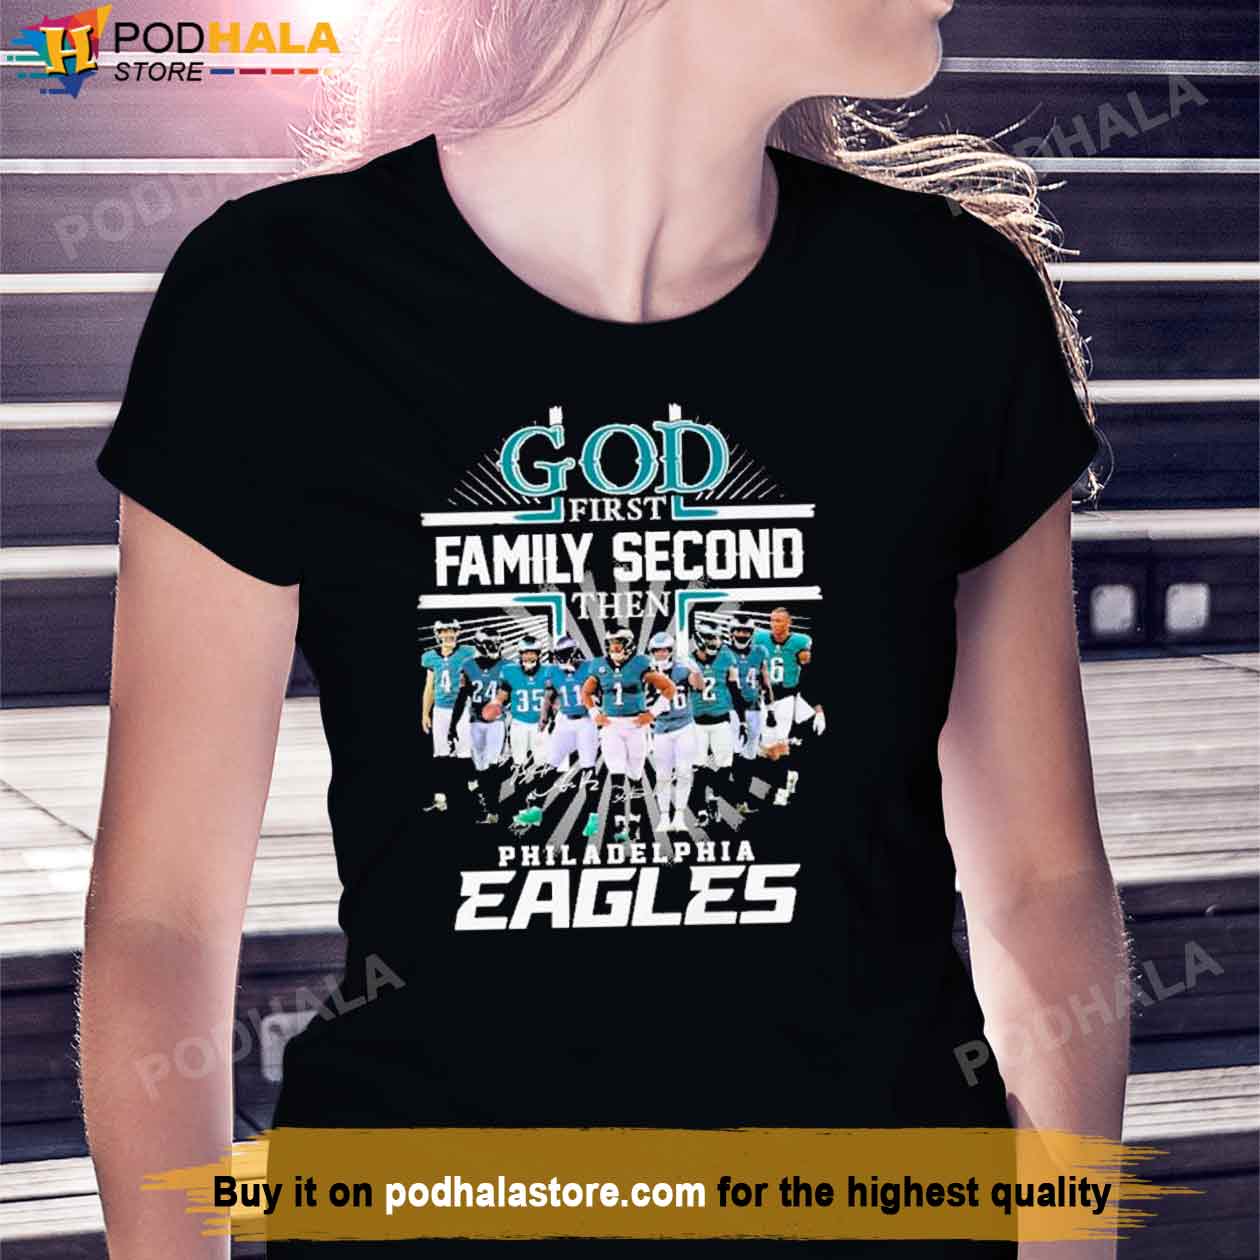 phila eagles t shirt